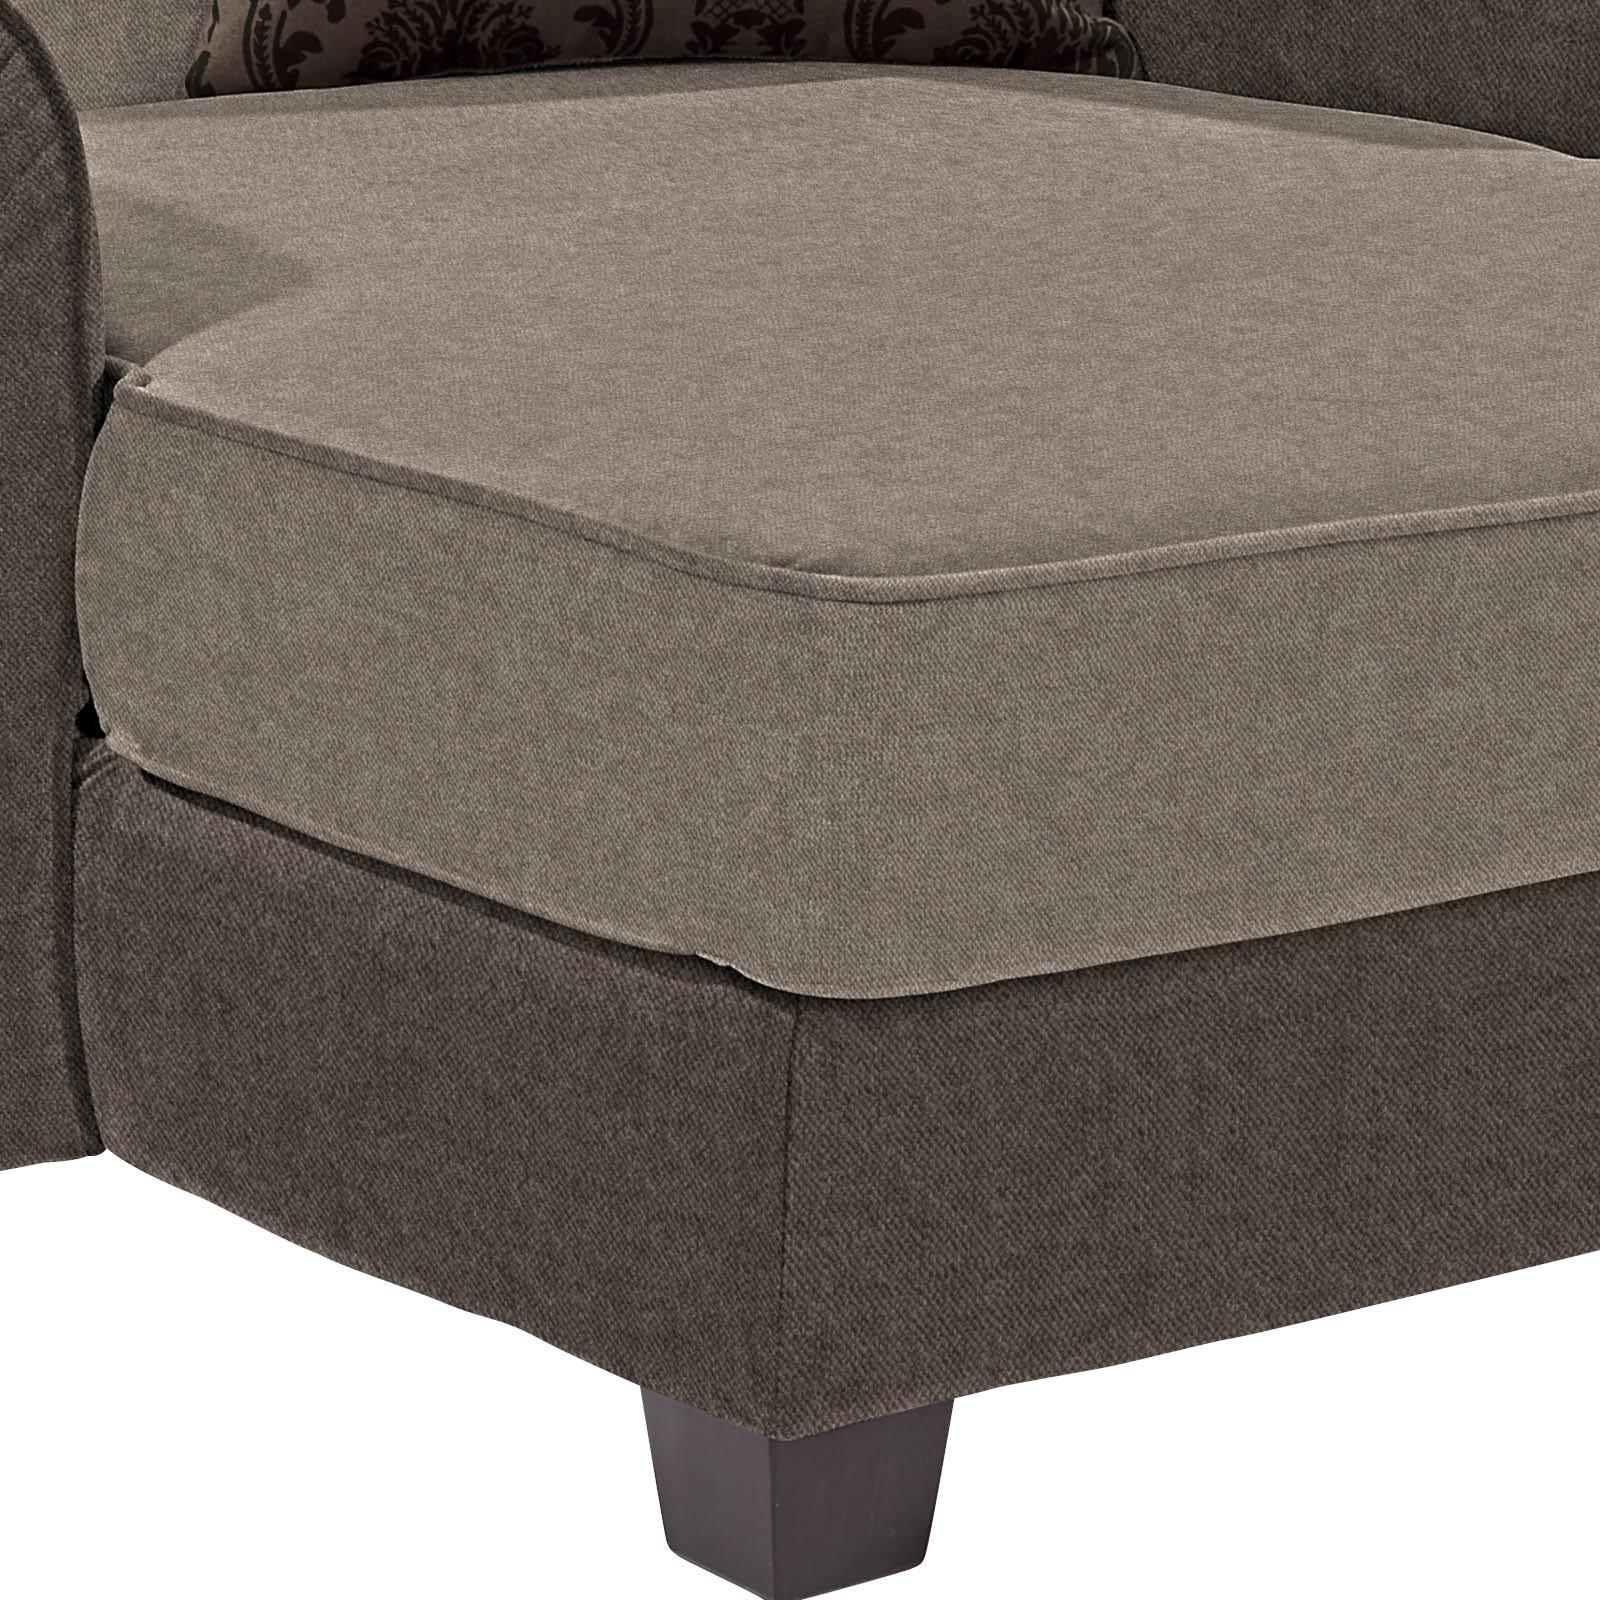 Fotelja Living - tamno smeđa/svijetlo smeđa, Romantik / Landhaus, drvo/tekstil (120/98/138cm) - Modern Living